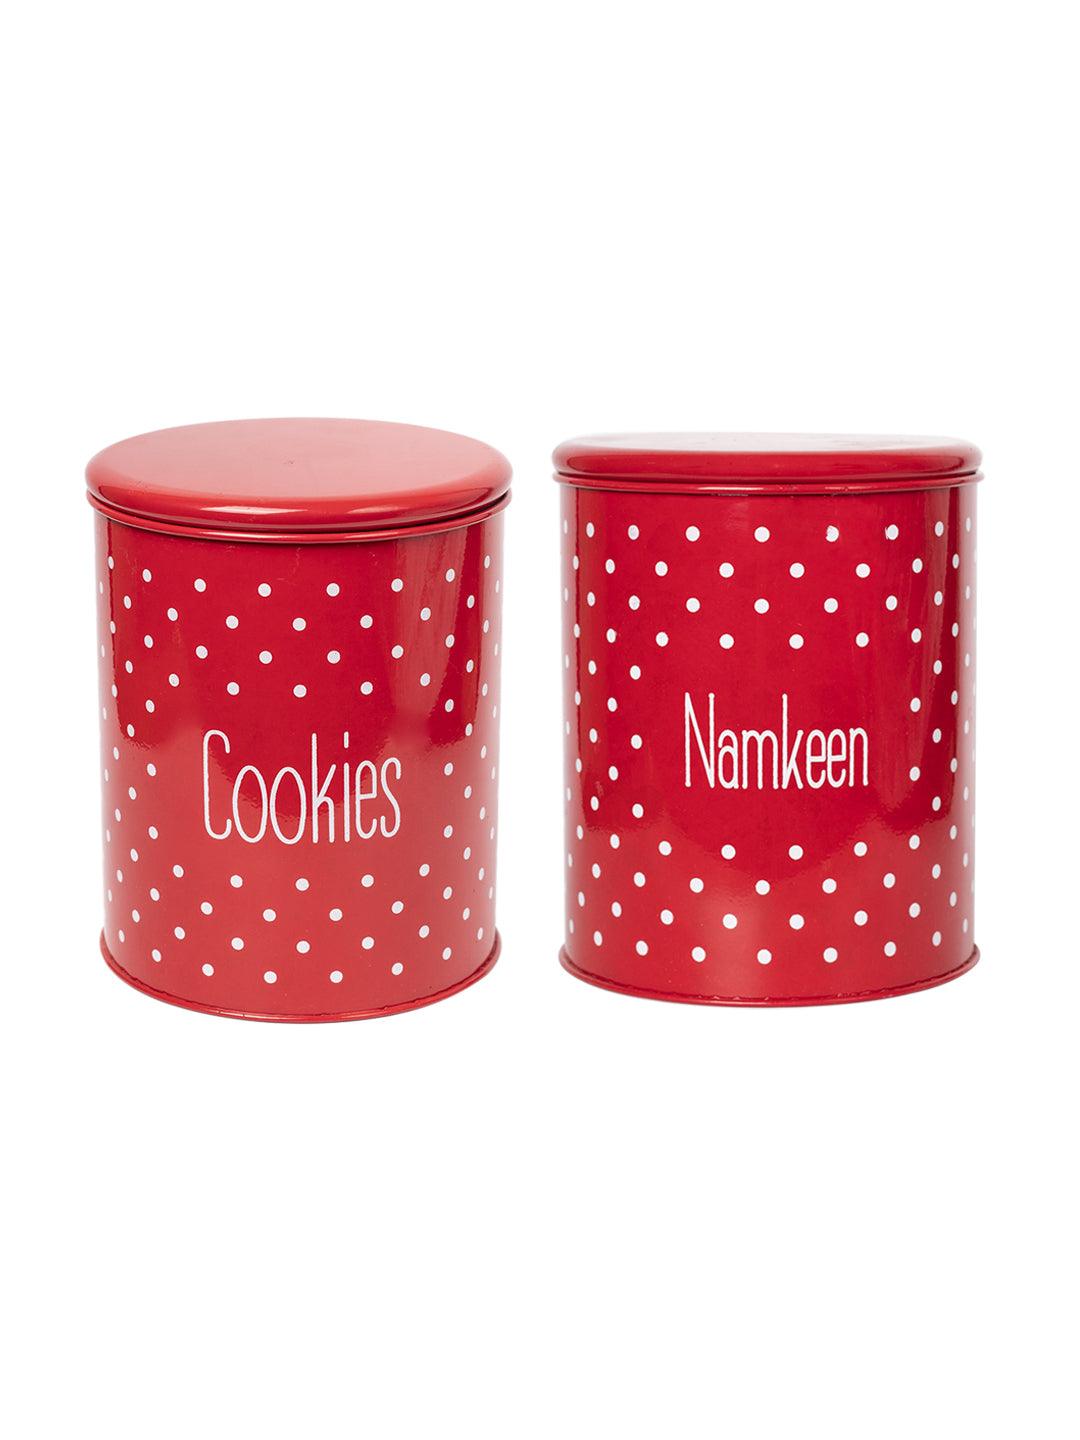 Stylish Red Cookie & Namkeen Jar (Each 1400 Ml) - MARKET 99